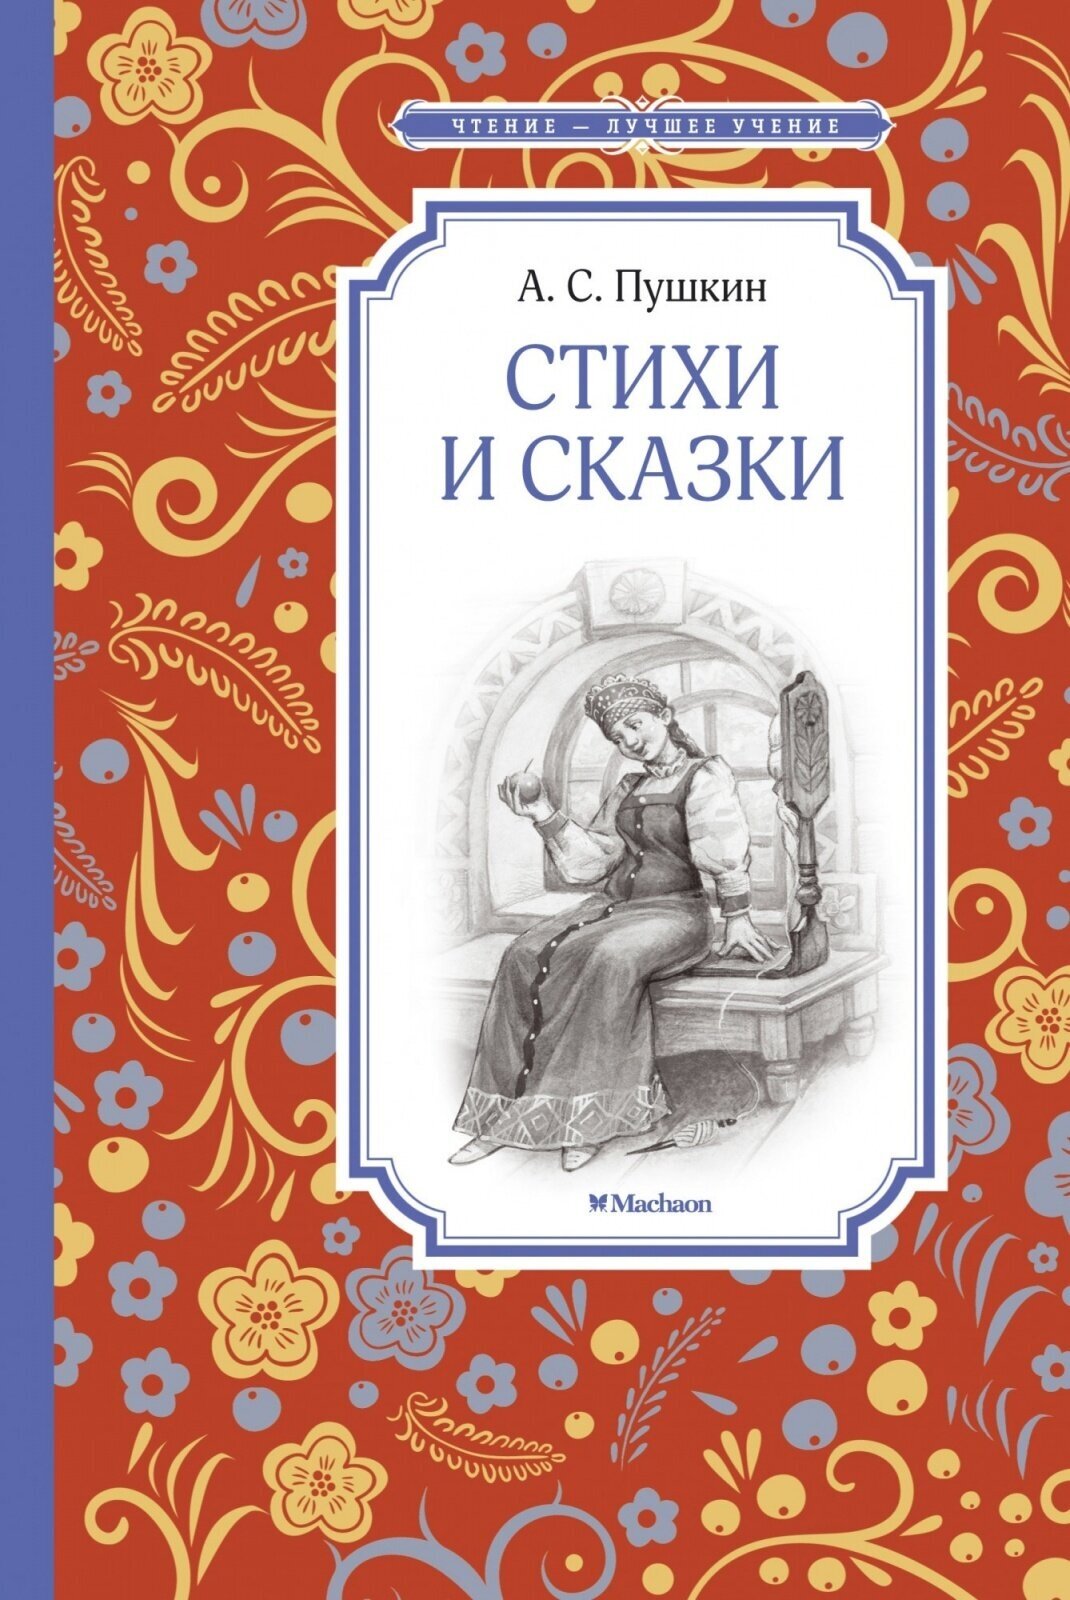 Книга Machaon Пушкин А. С, Стихи и сказки